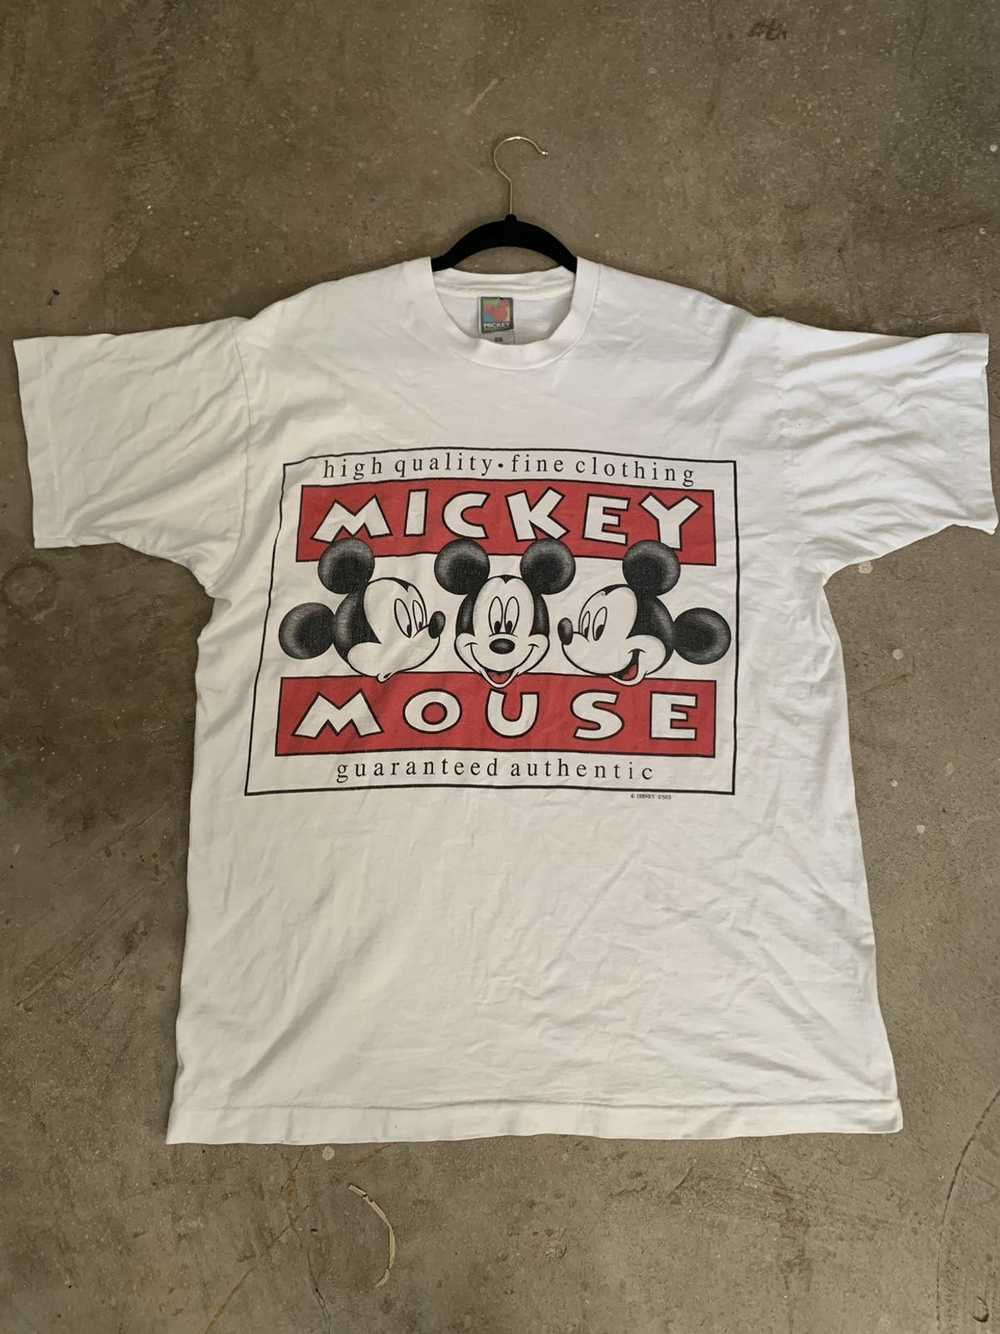 Disney mickey mouse houston astros shirt - Guineashirt Premium ™ LLC